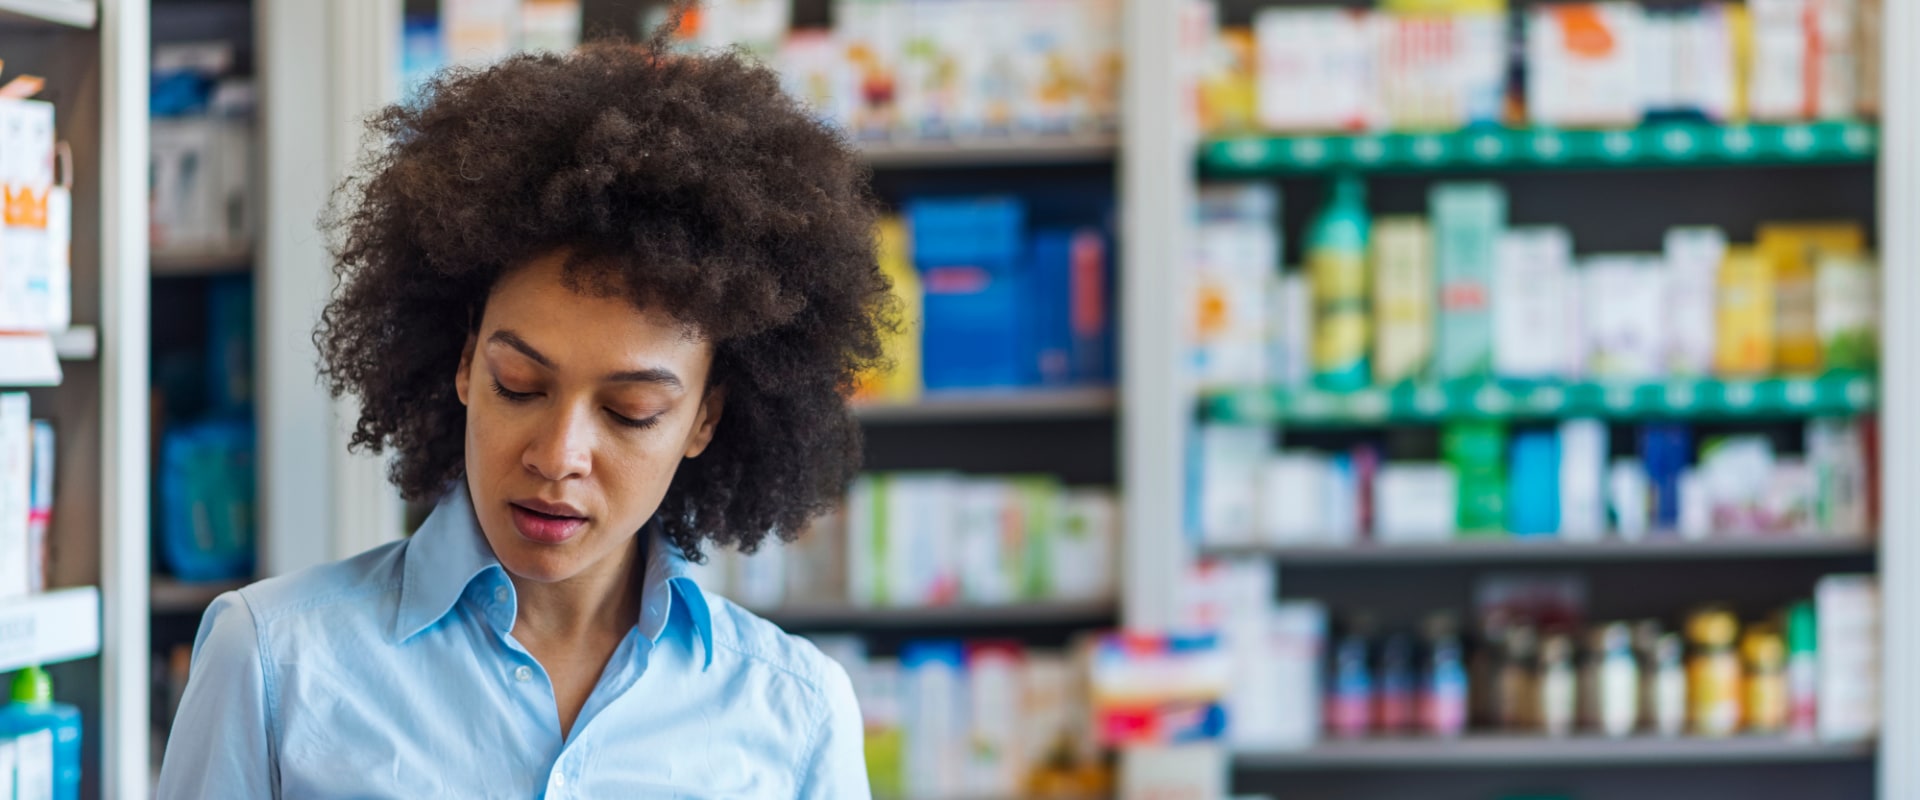 Exploring the Cost of Prescription Drugs